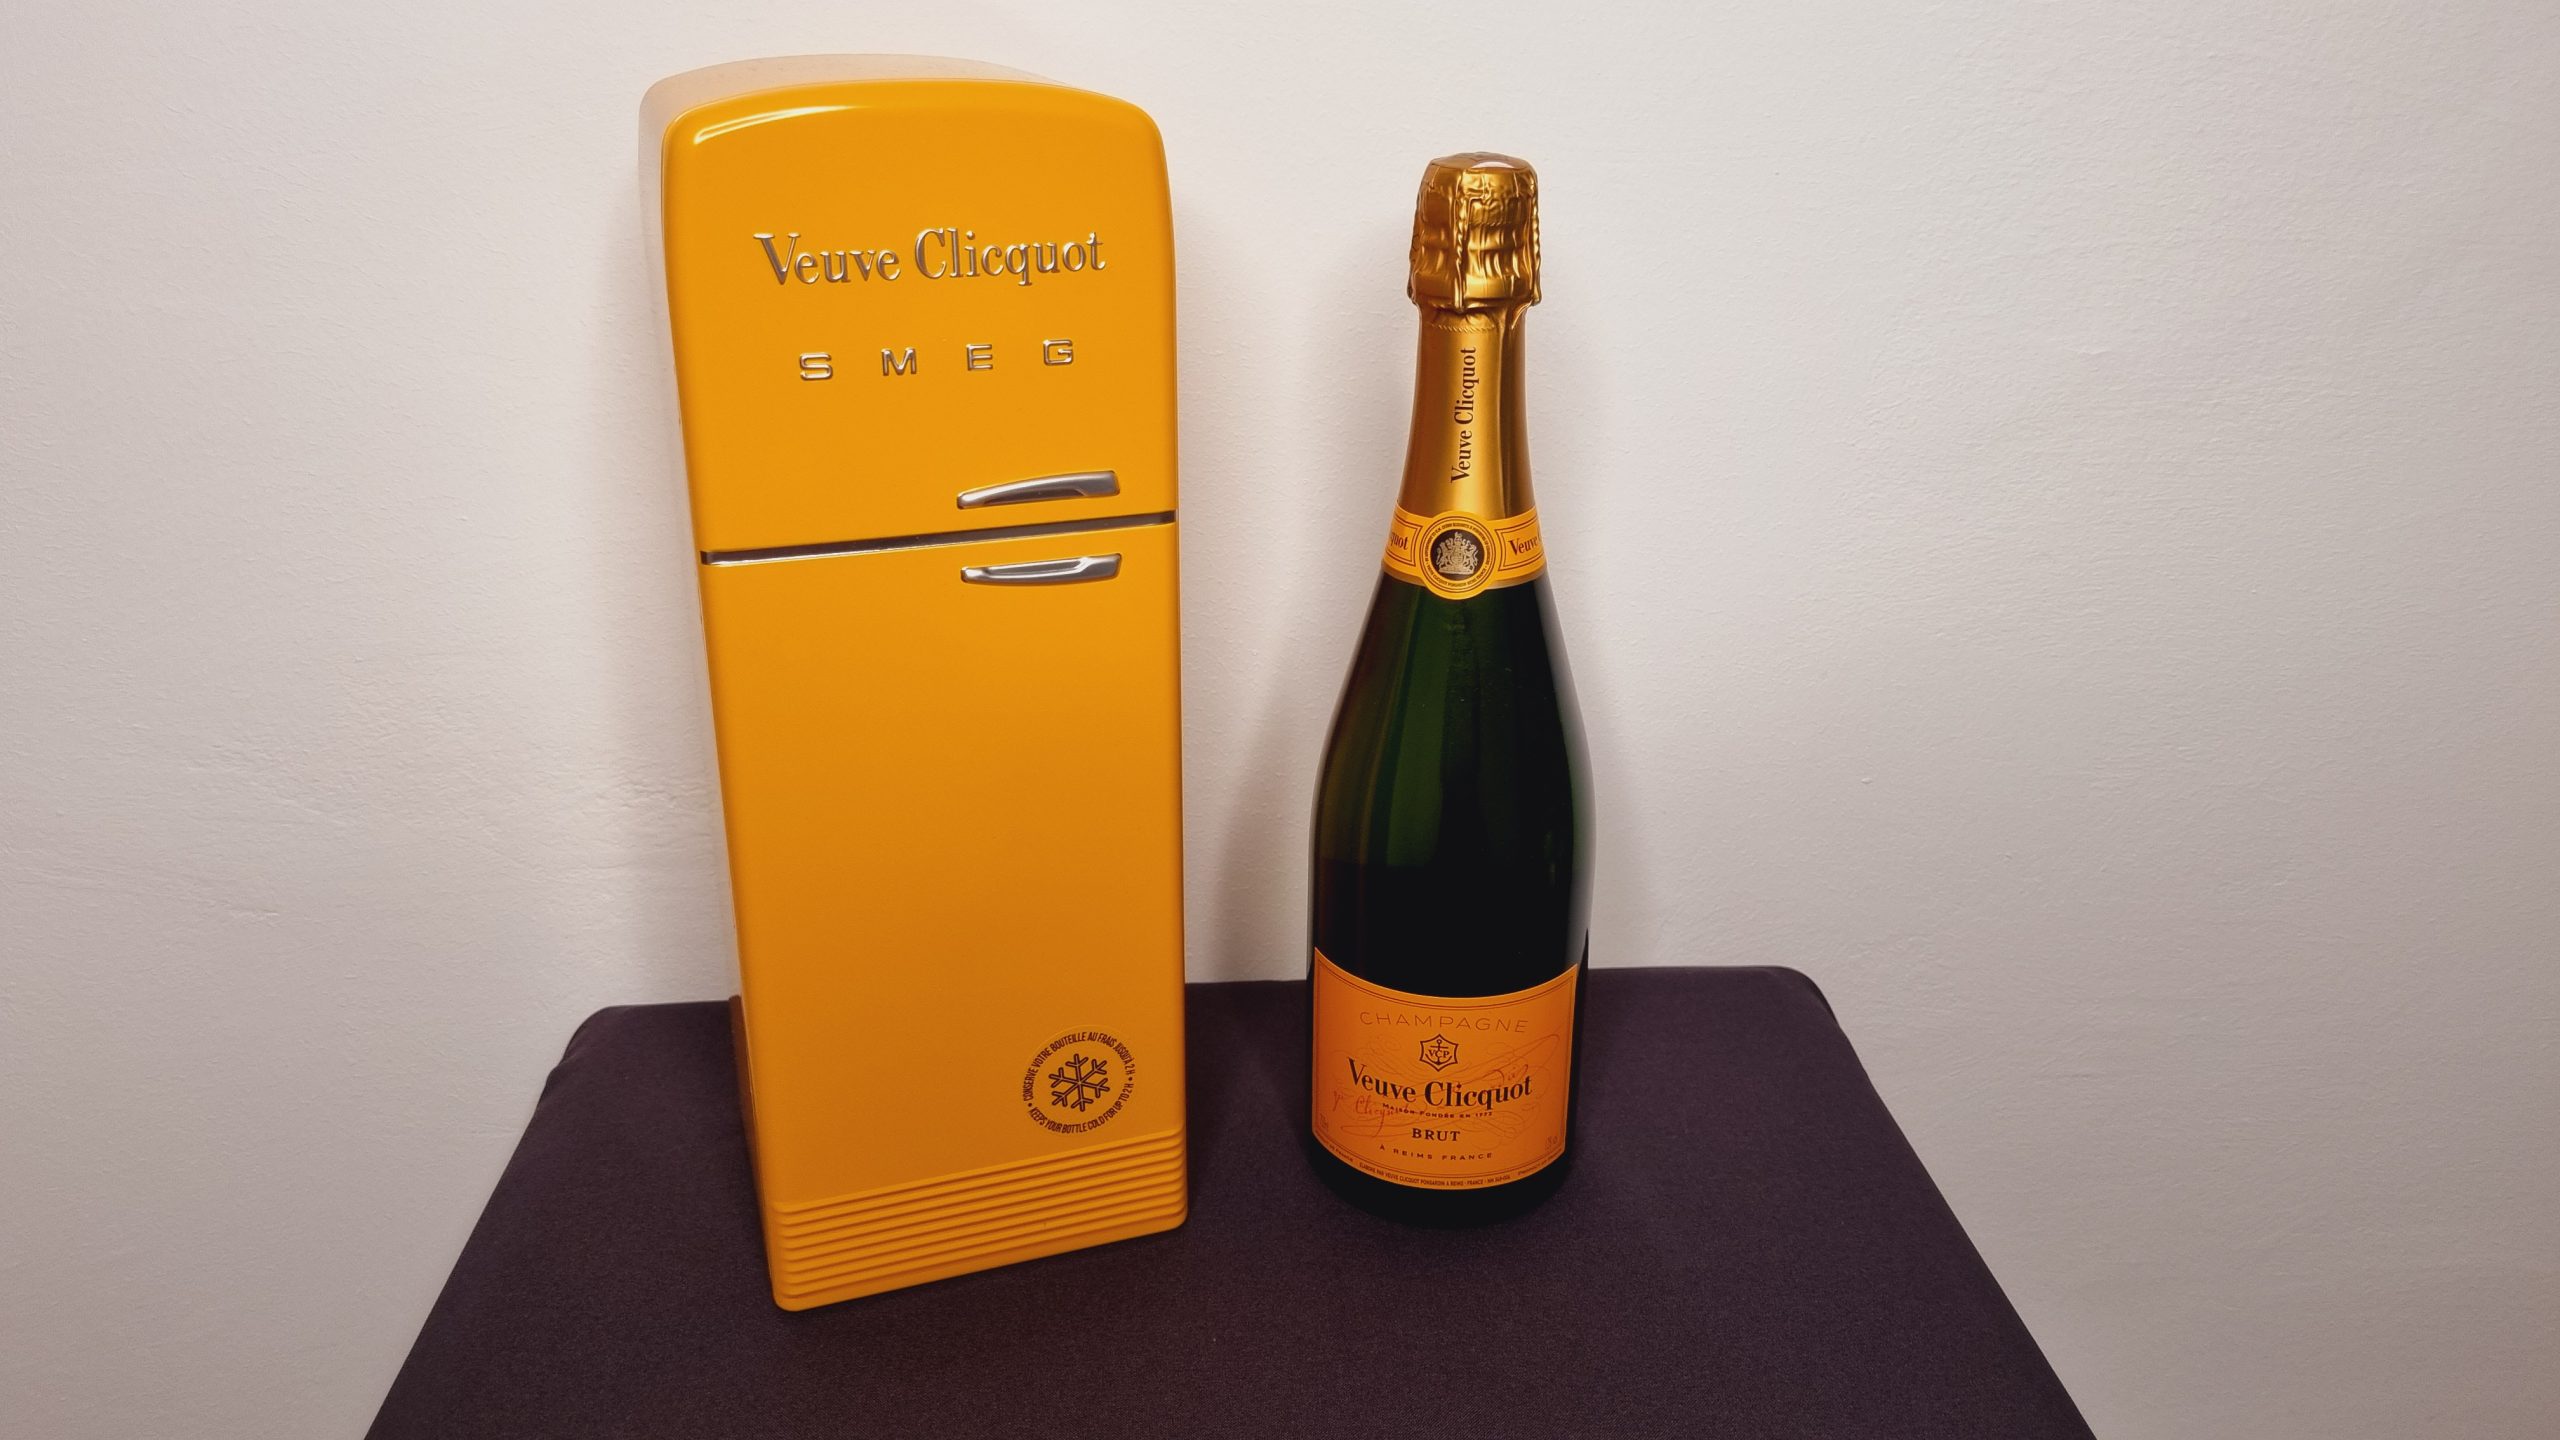 ELADVA – Veuve Clicquot Brut Champagne SMEG díszdobozban – 55.000.-Ft